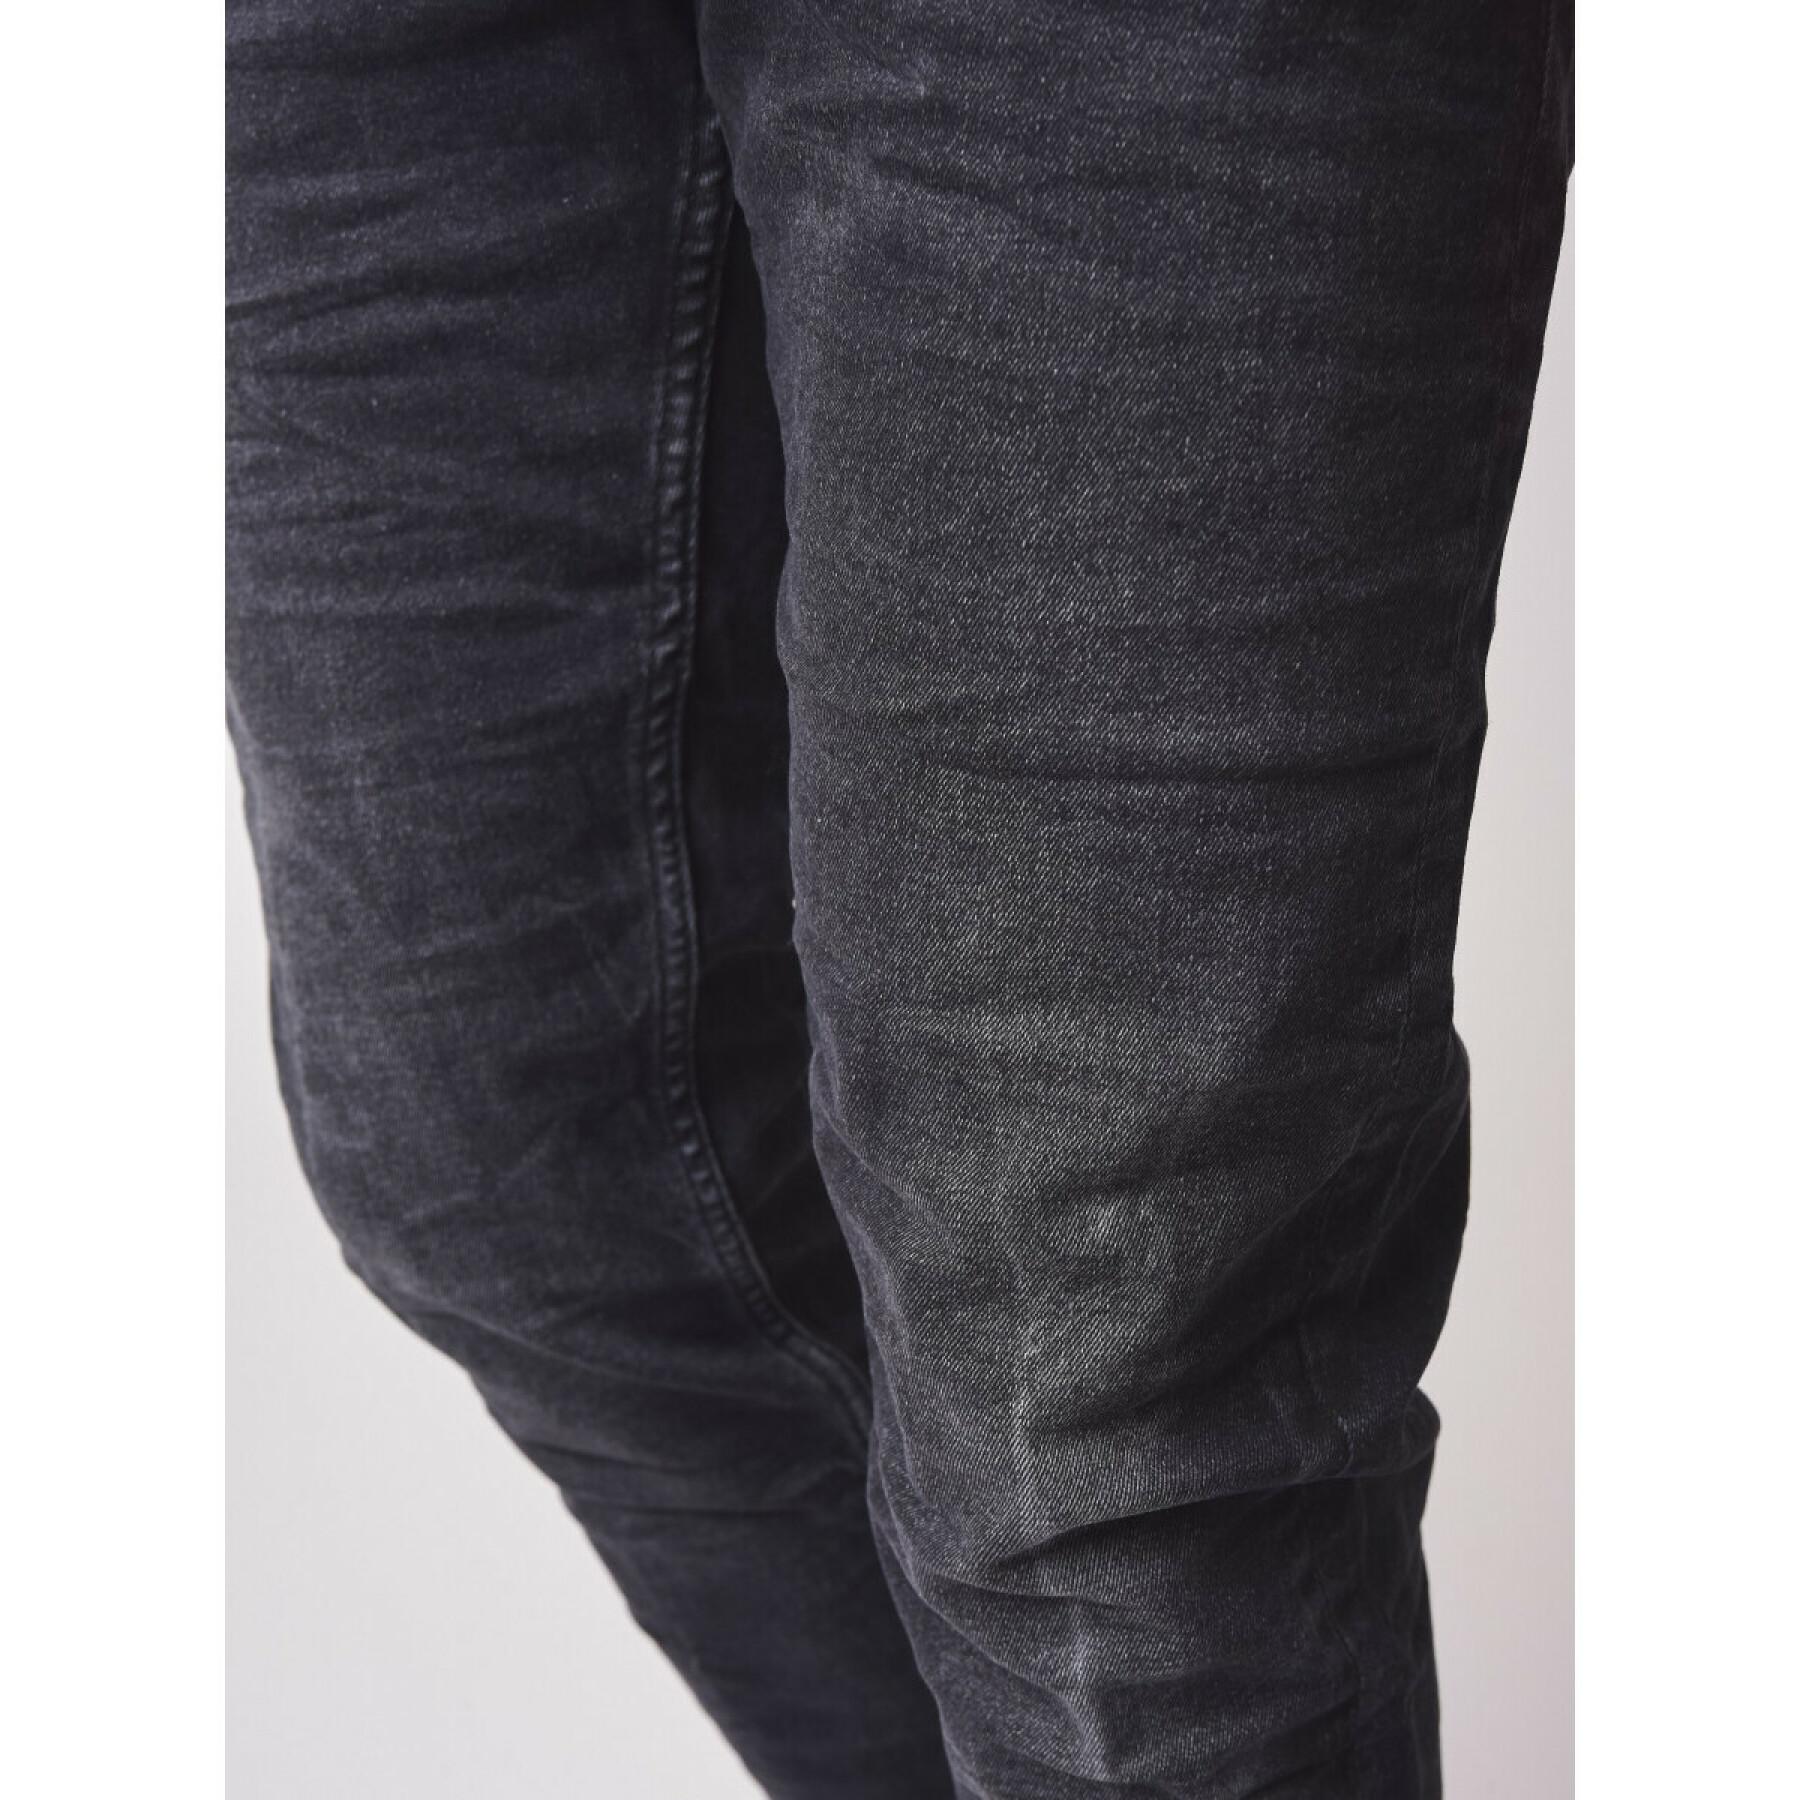 Basic skinny jeans, licht verschoten Project X Paris